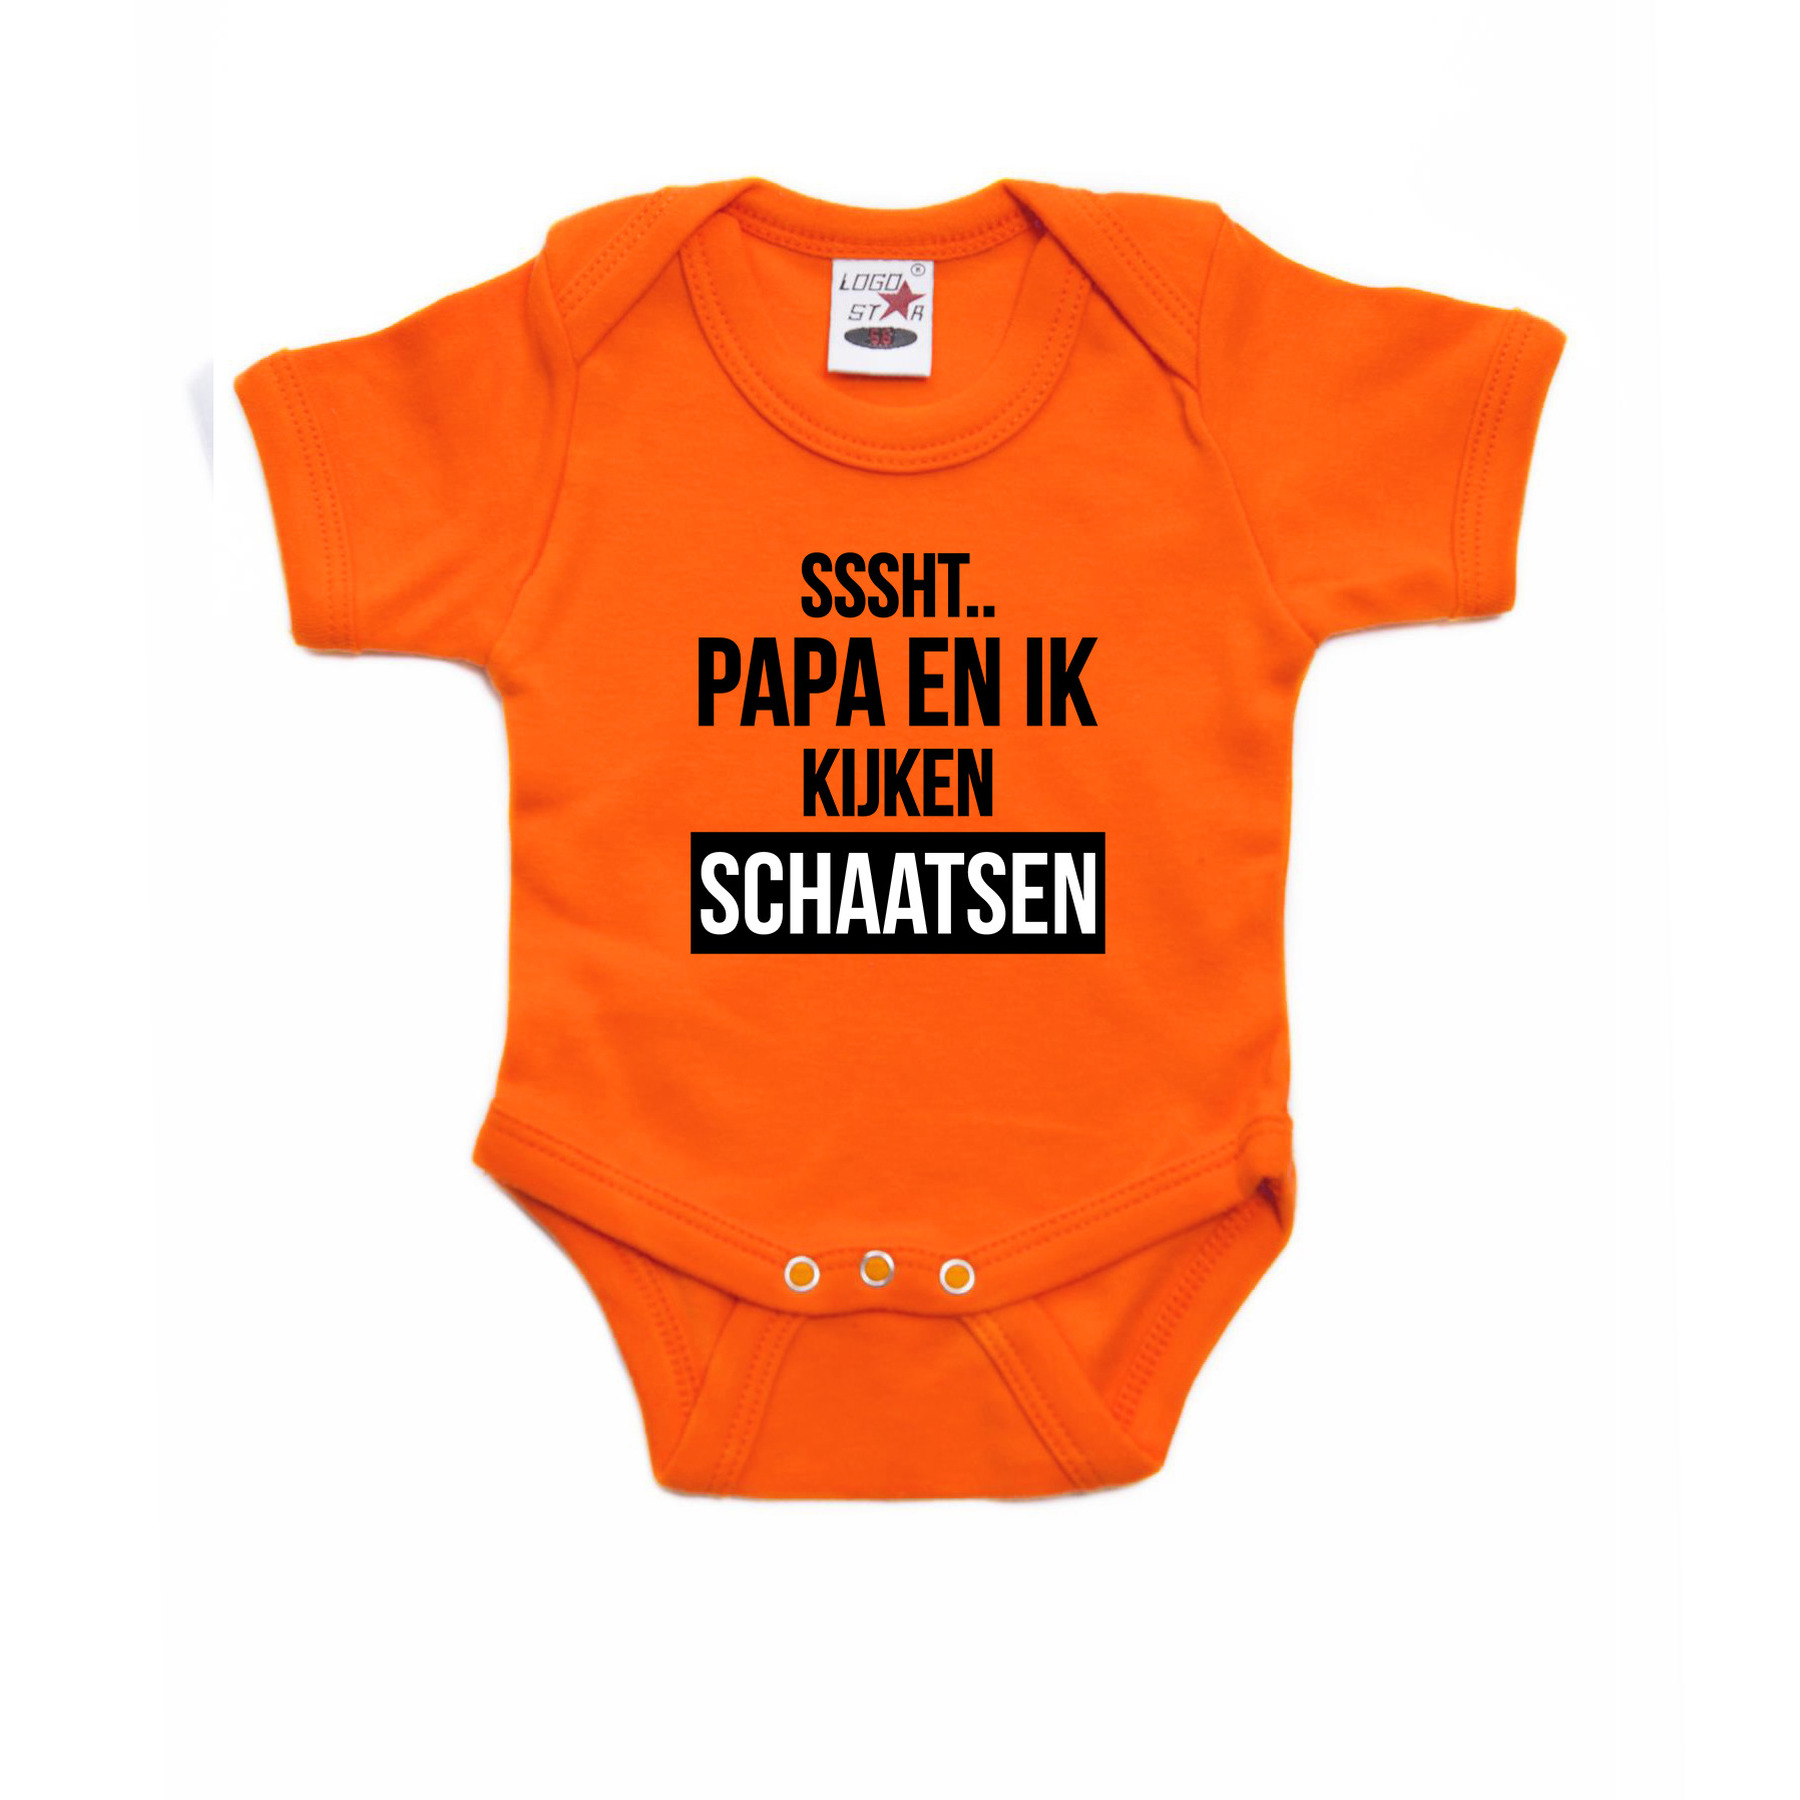 Sssht kijken schaatsen baby rompertje oranje Holland / Nederland / EK / WK supporter